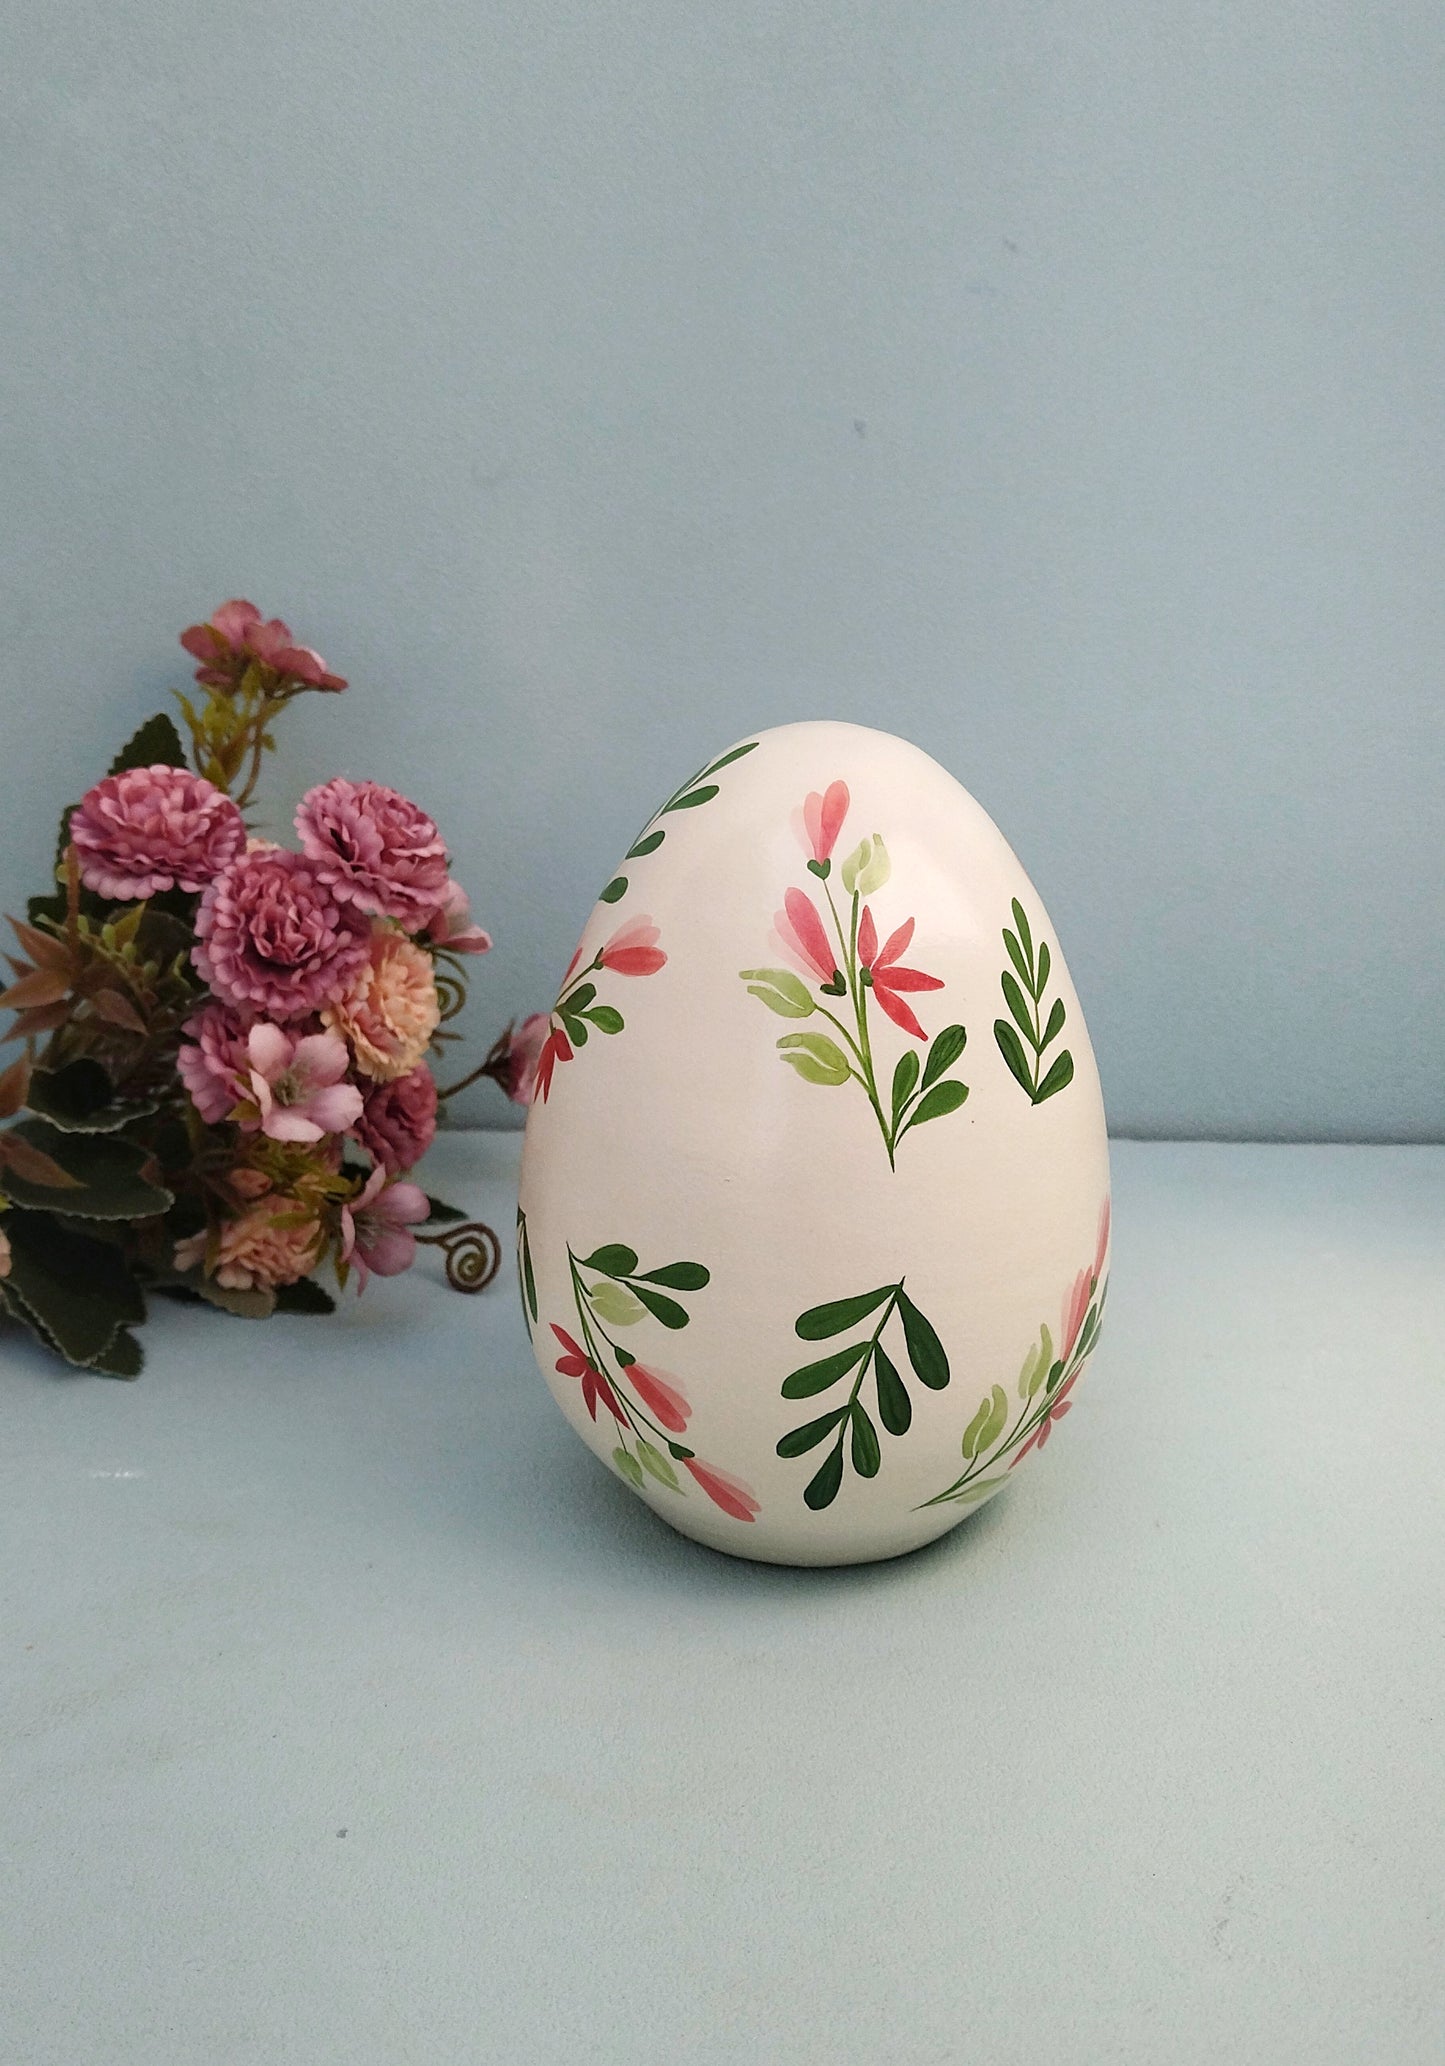 Handmade Ceramic EasterEgg With Flower Bouquets